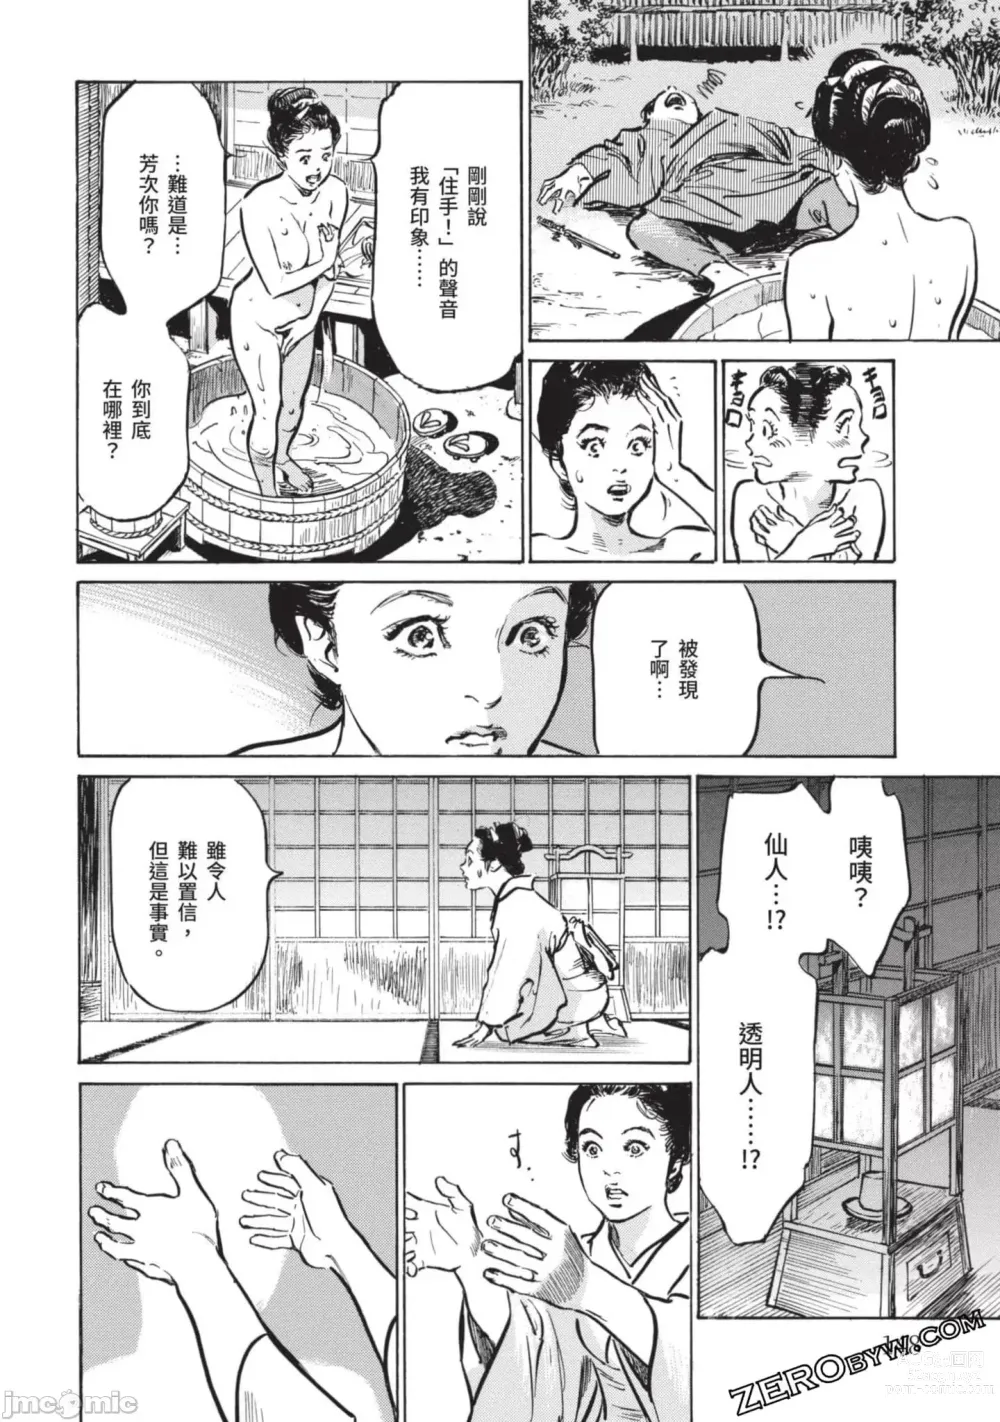 Page 147 of manga Inshuu Hiroku Midare Mandara 2